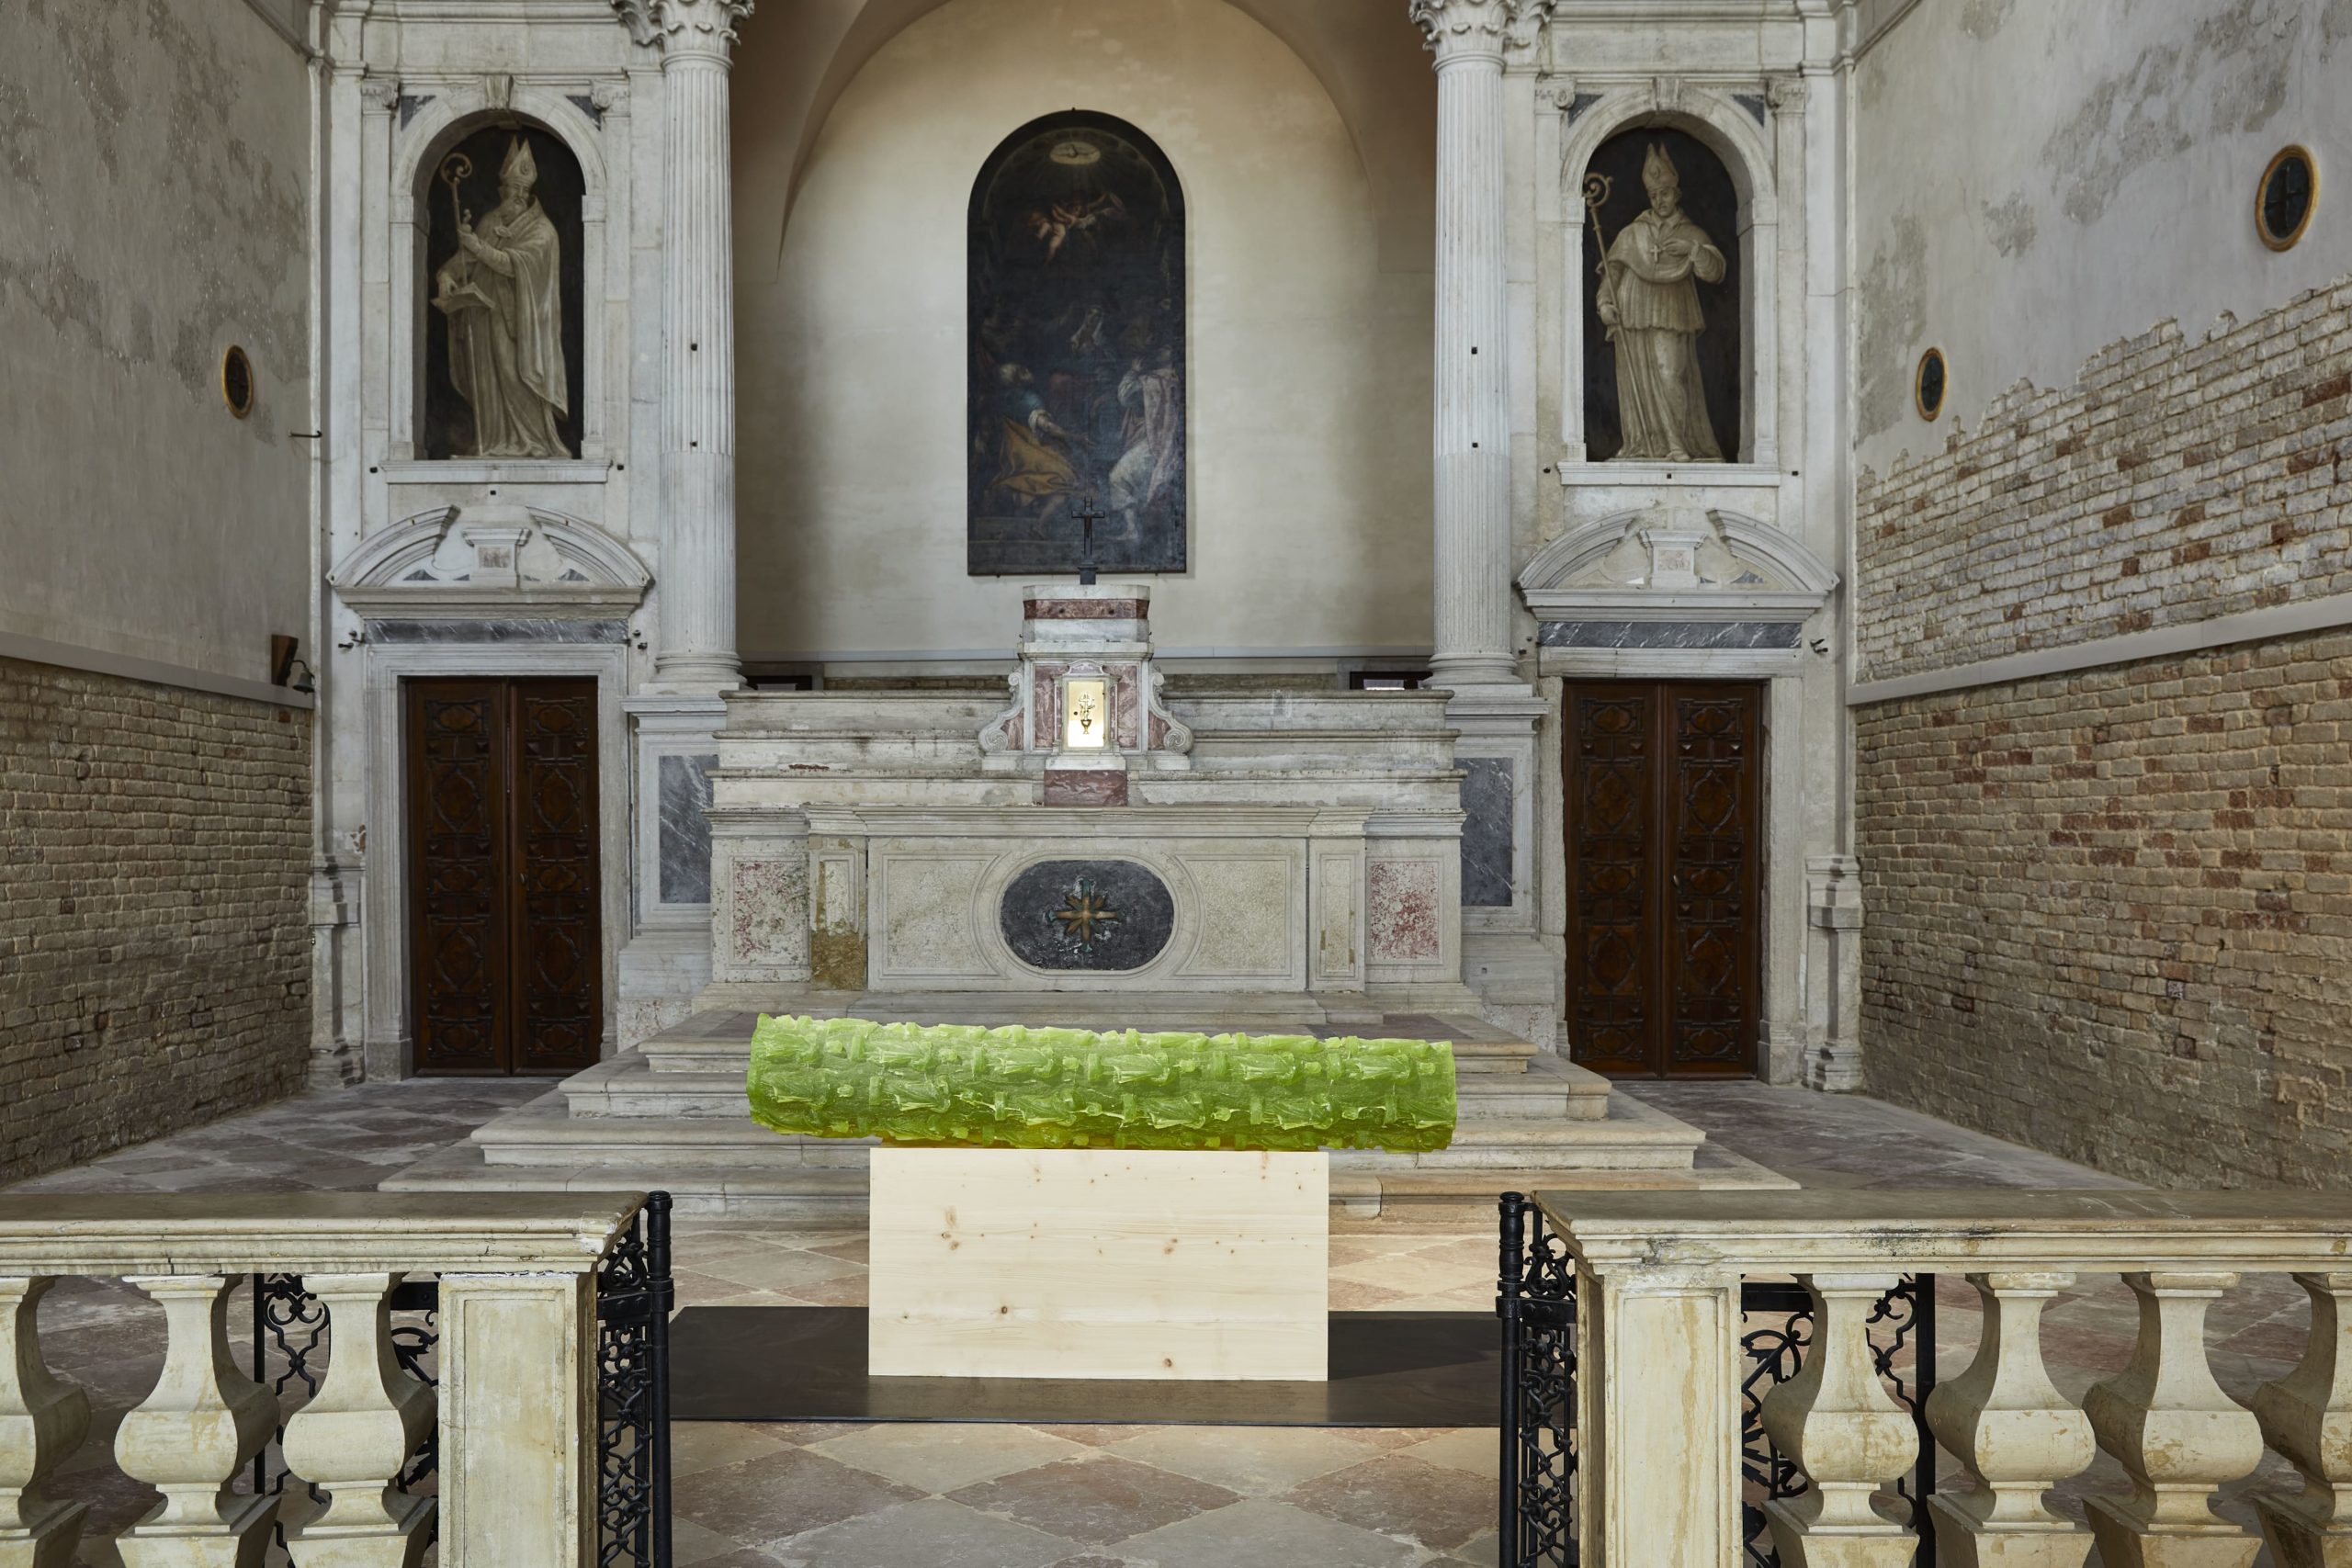 Installation view of "Trees Grow from the Sky" at the Chiesa di Santa Maria della Visitazione, courtesy of Rony Plesl.